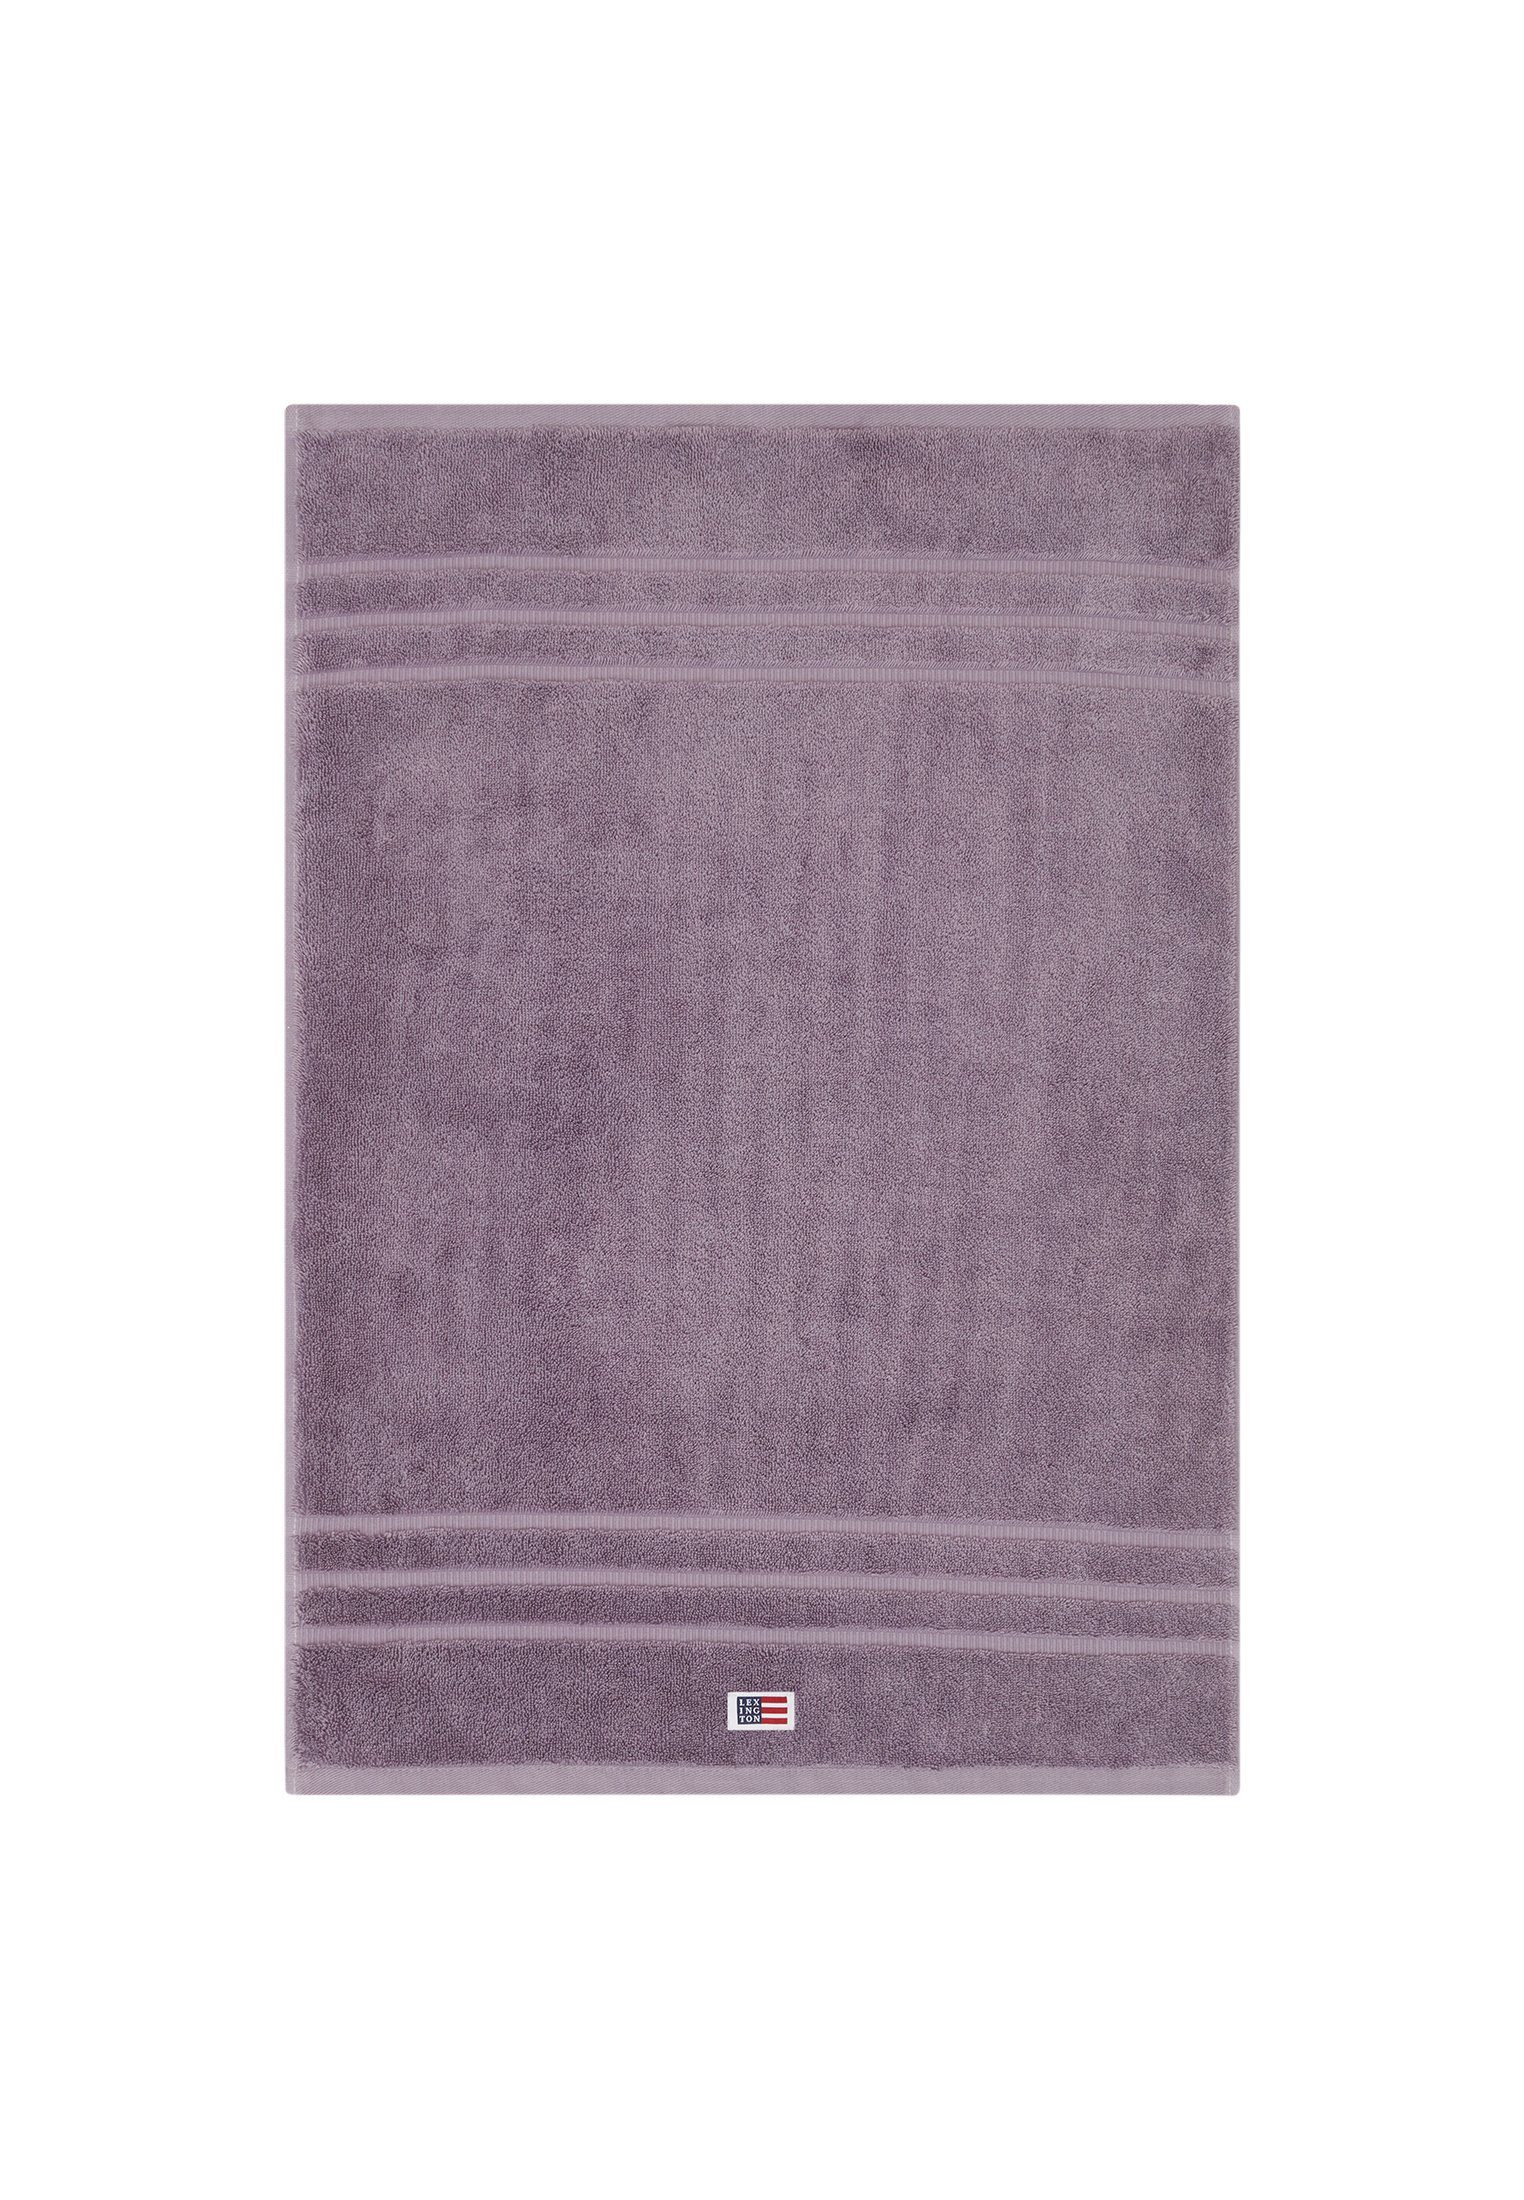 Handtuch lilac Lexington Original heather Towel